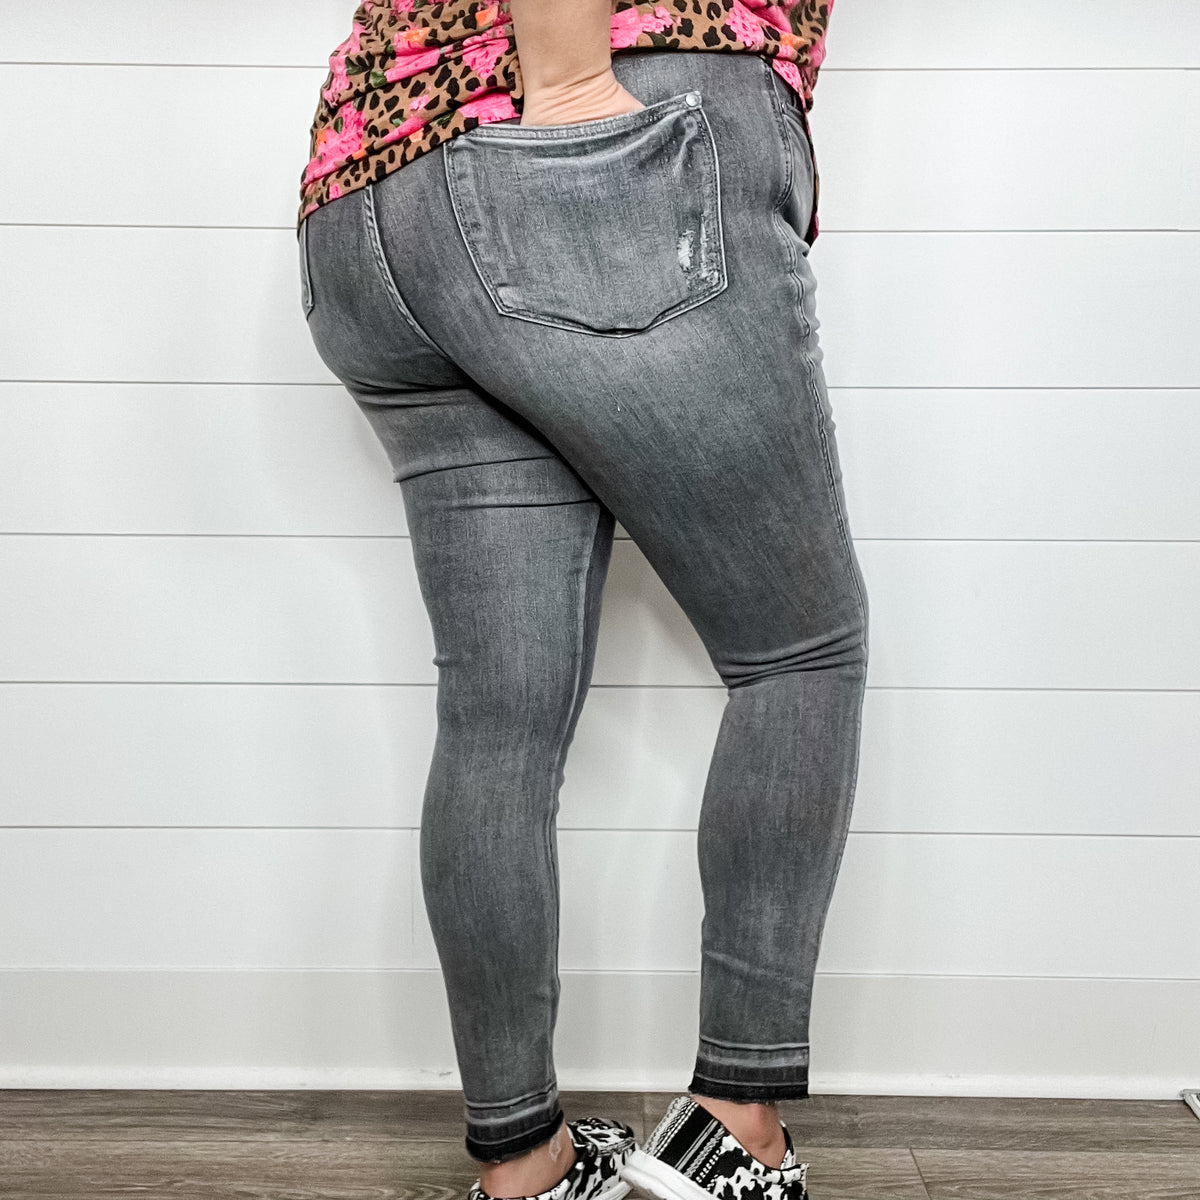 Judy Blue Tummy Control Jeans  Stretchy Denim that Slims